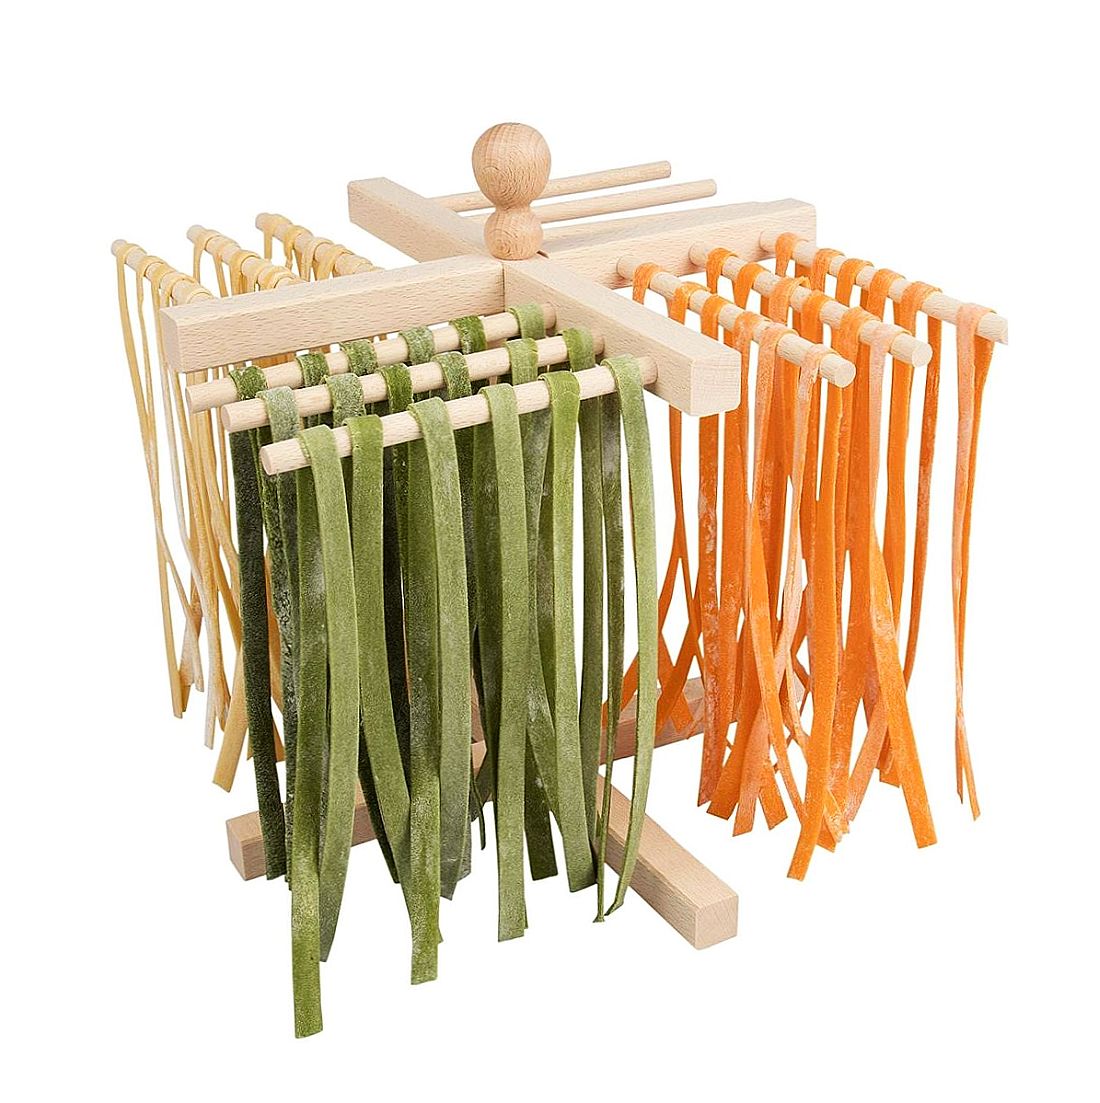 Buy Hardwood Pasta Drying Rack Designed to Work With Kitchenaid